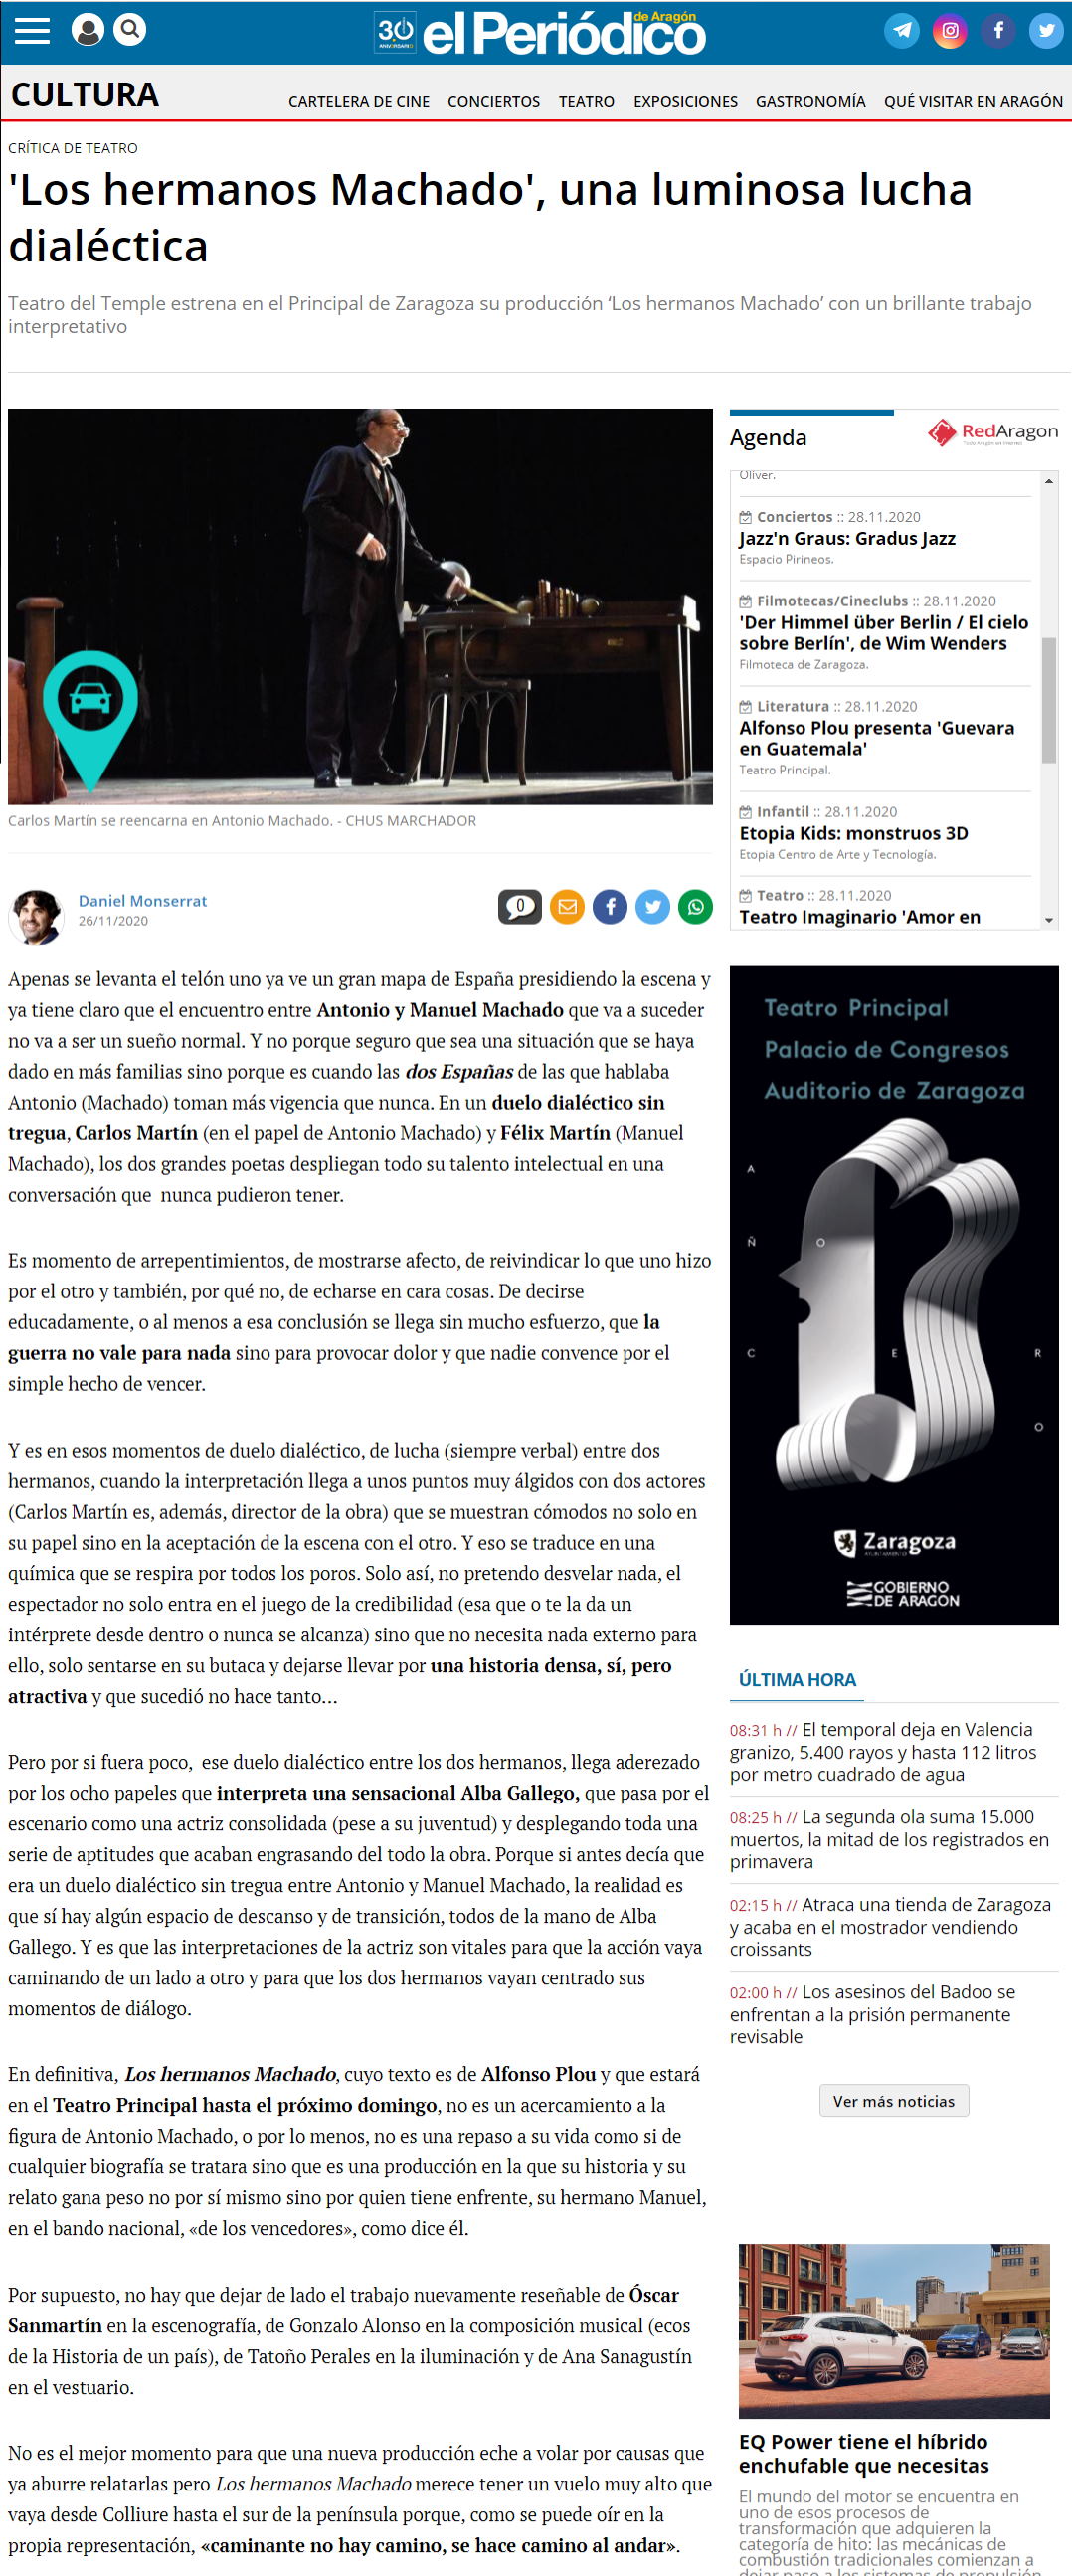 critica-El-Periodico-Monserrat